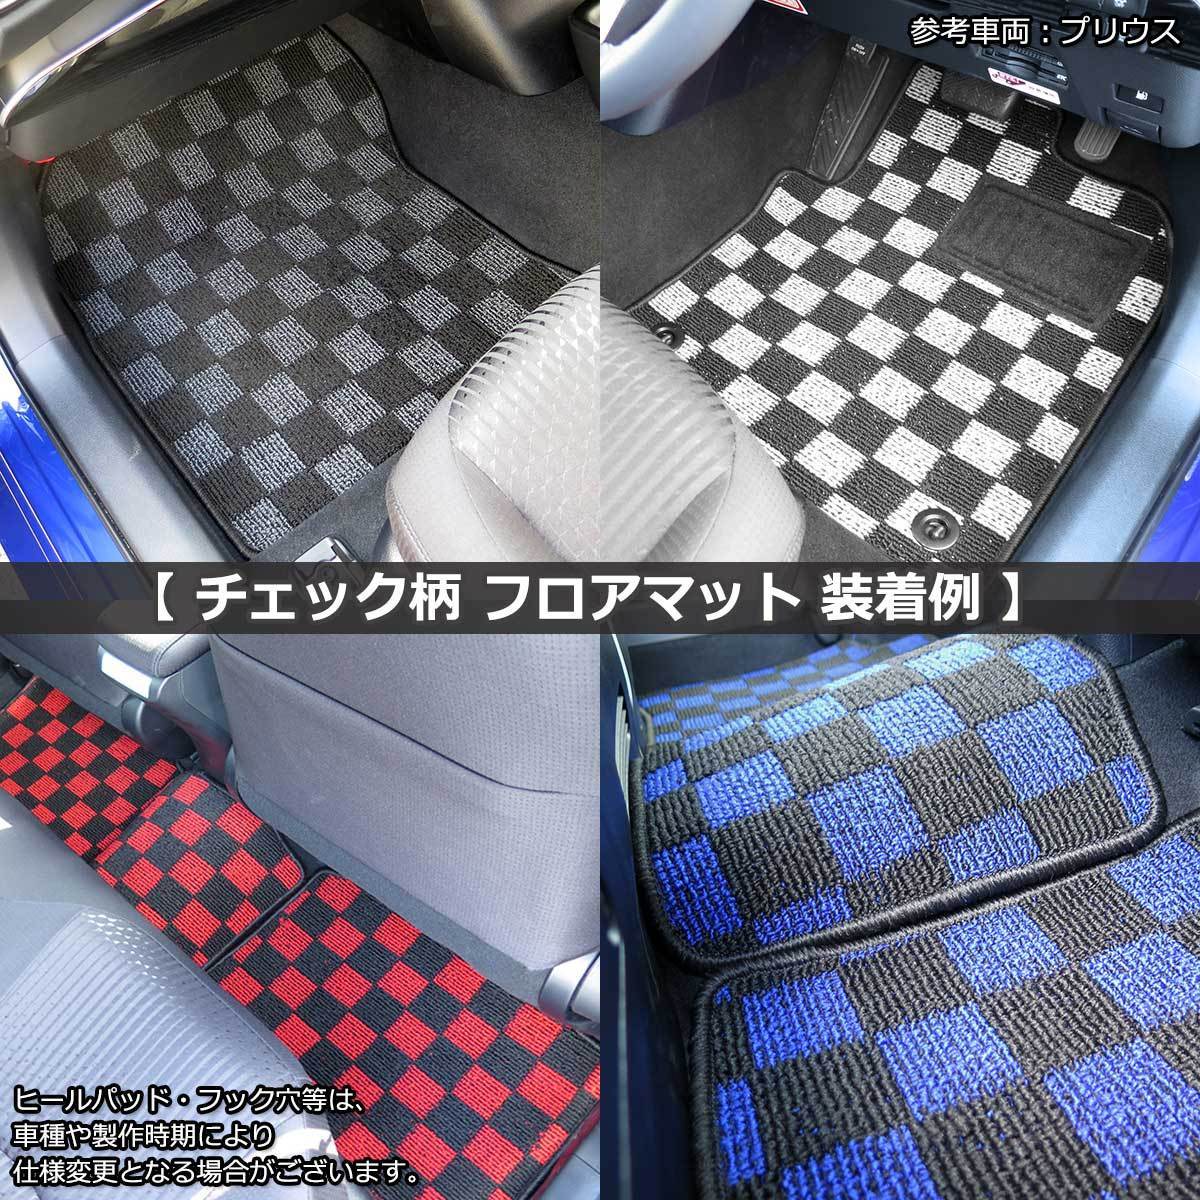  Harrier MXUA80 MXUA85 AXUH80 AXUH85 check pattern black × white floor mat floor seat cover car mat floor carpet automobile parts 